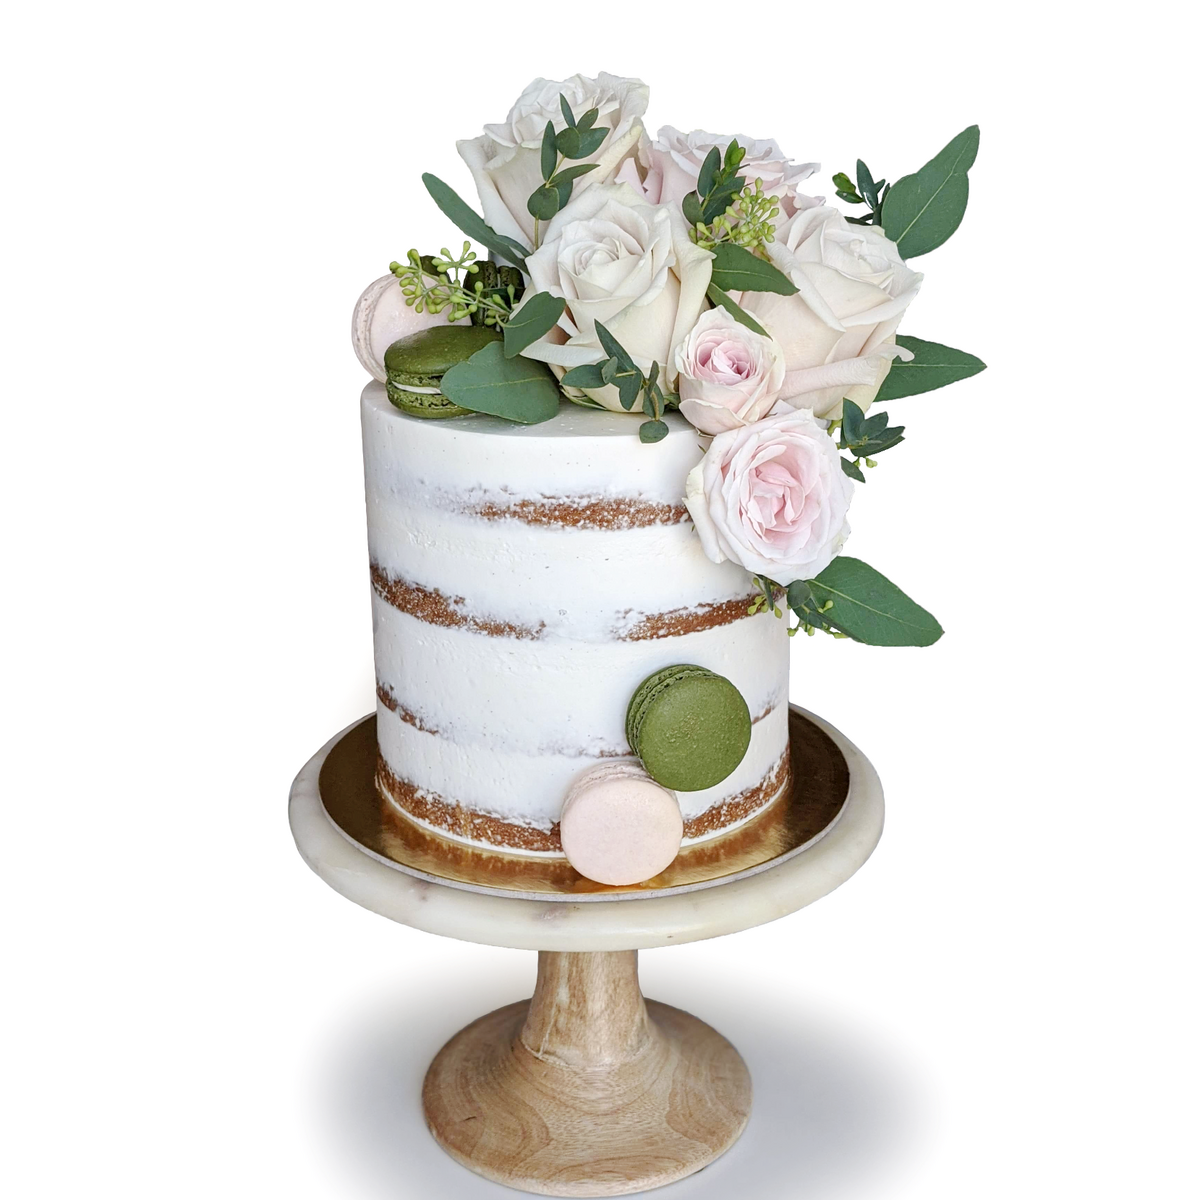 Whippt Kitchen - Macaron cutting cake 2020 3